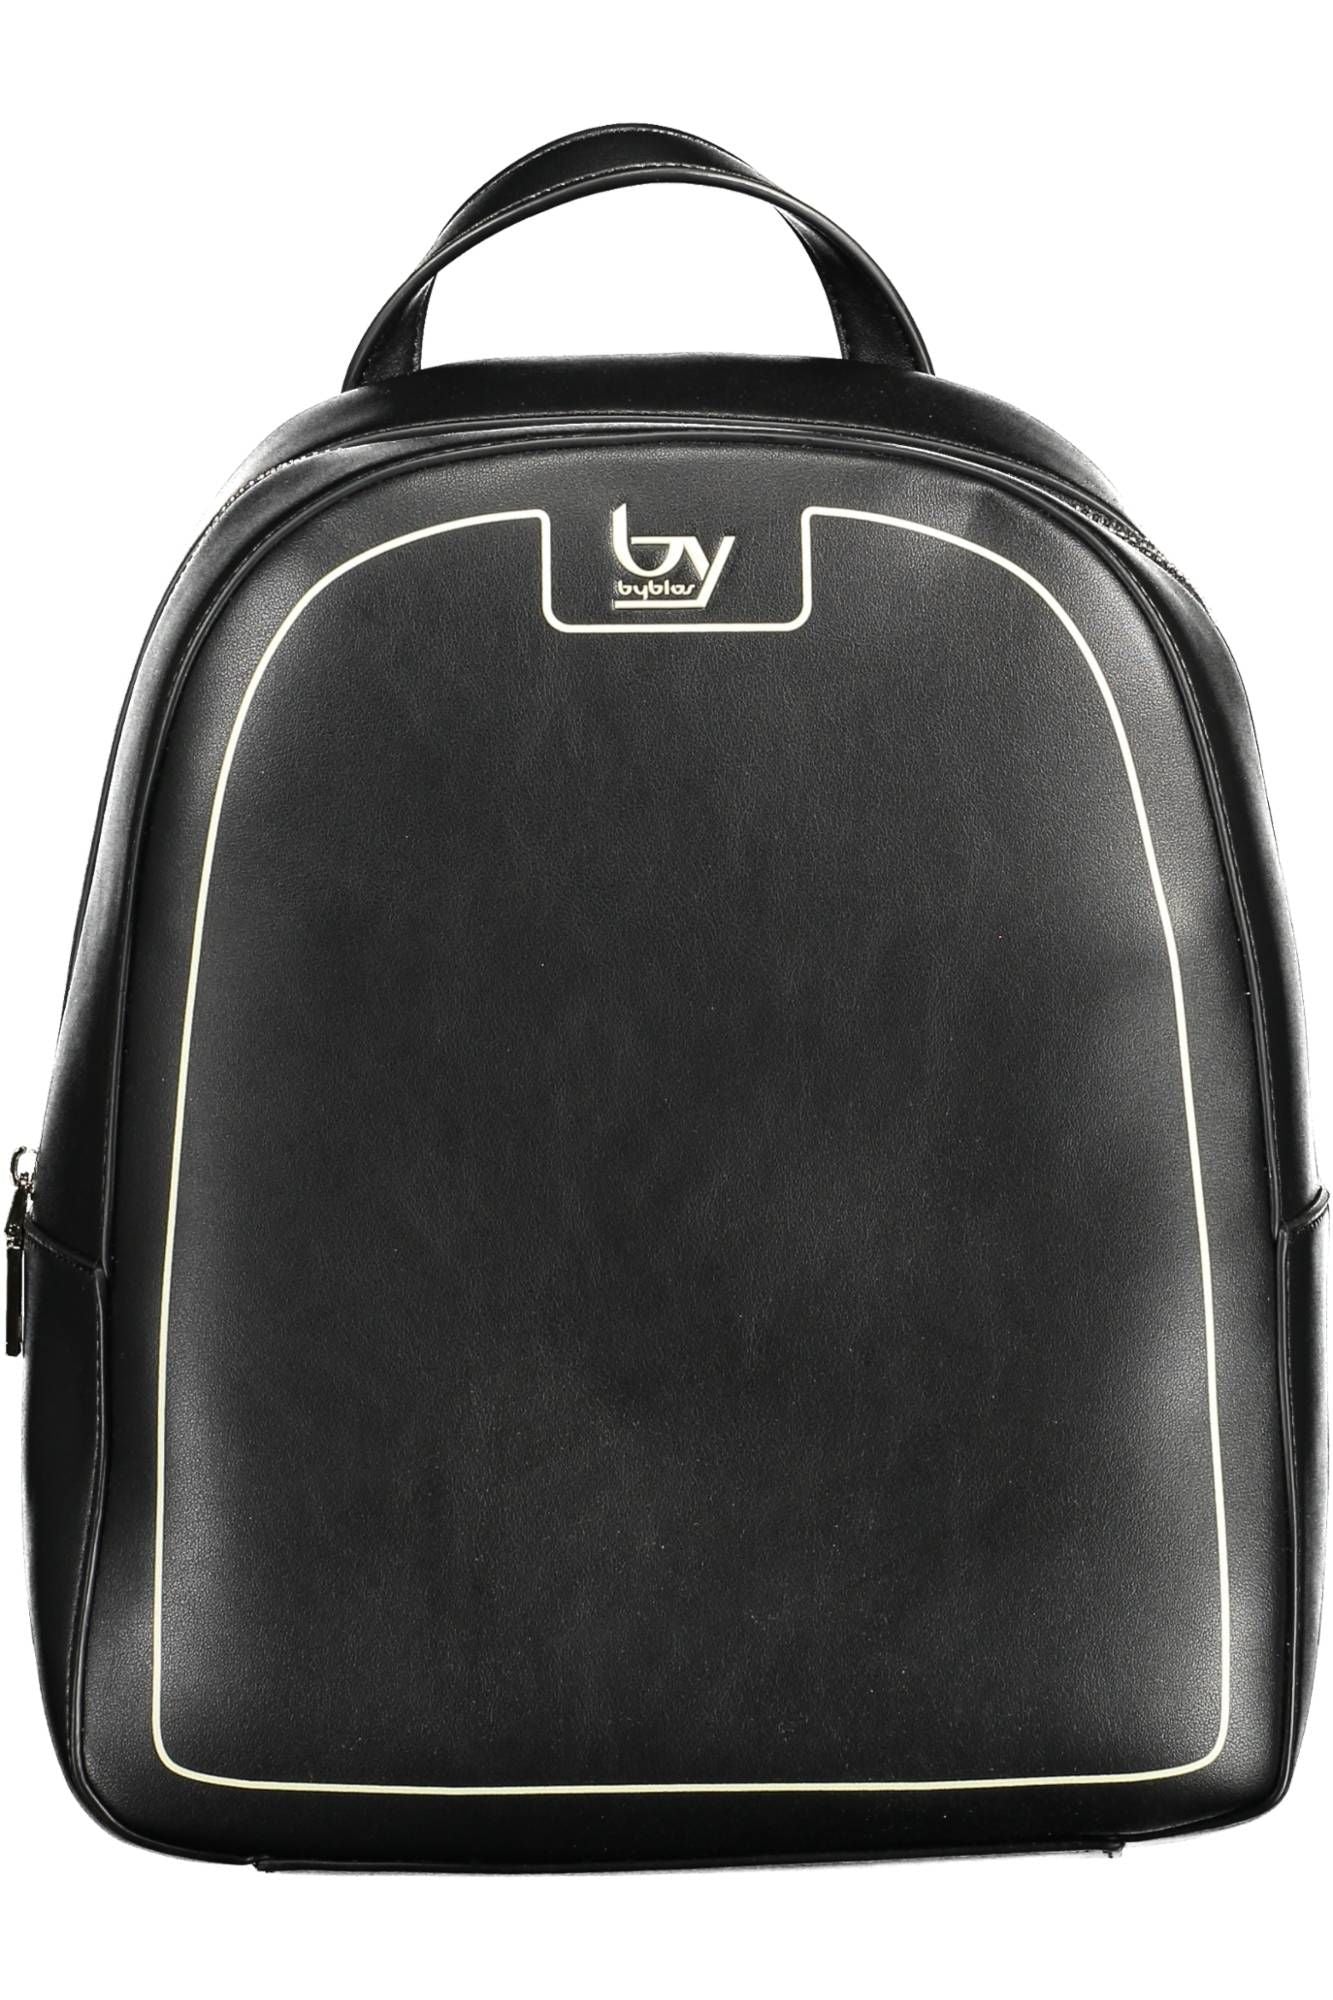 Elegant Black Backpack with Contrasting Details - Divitiae Glamour